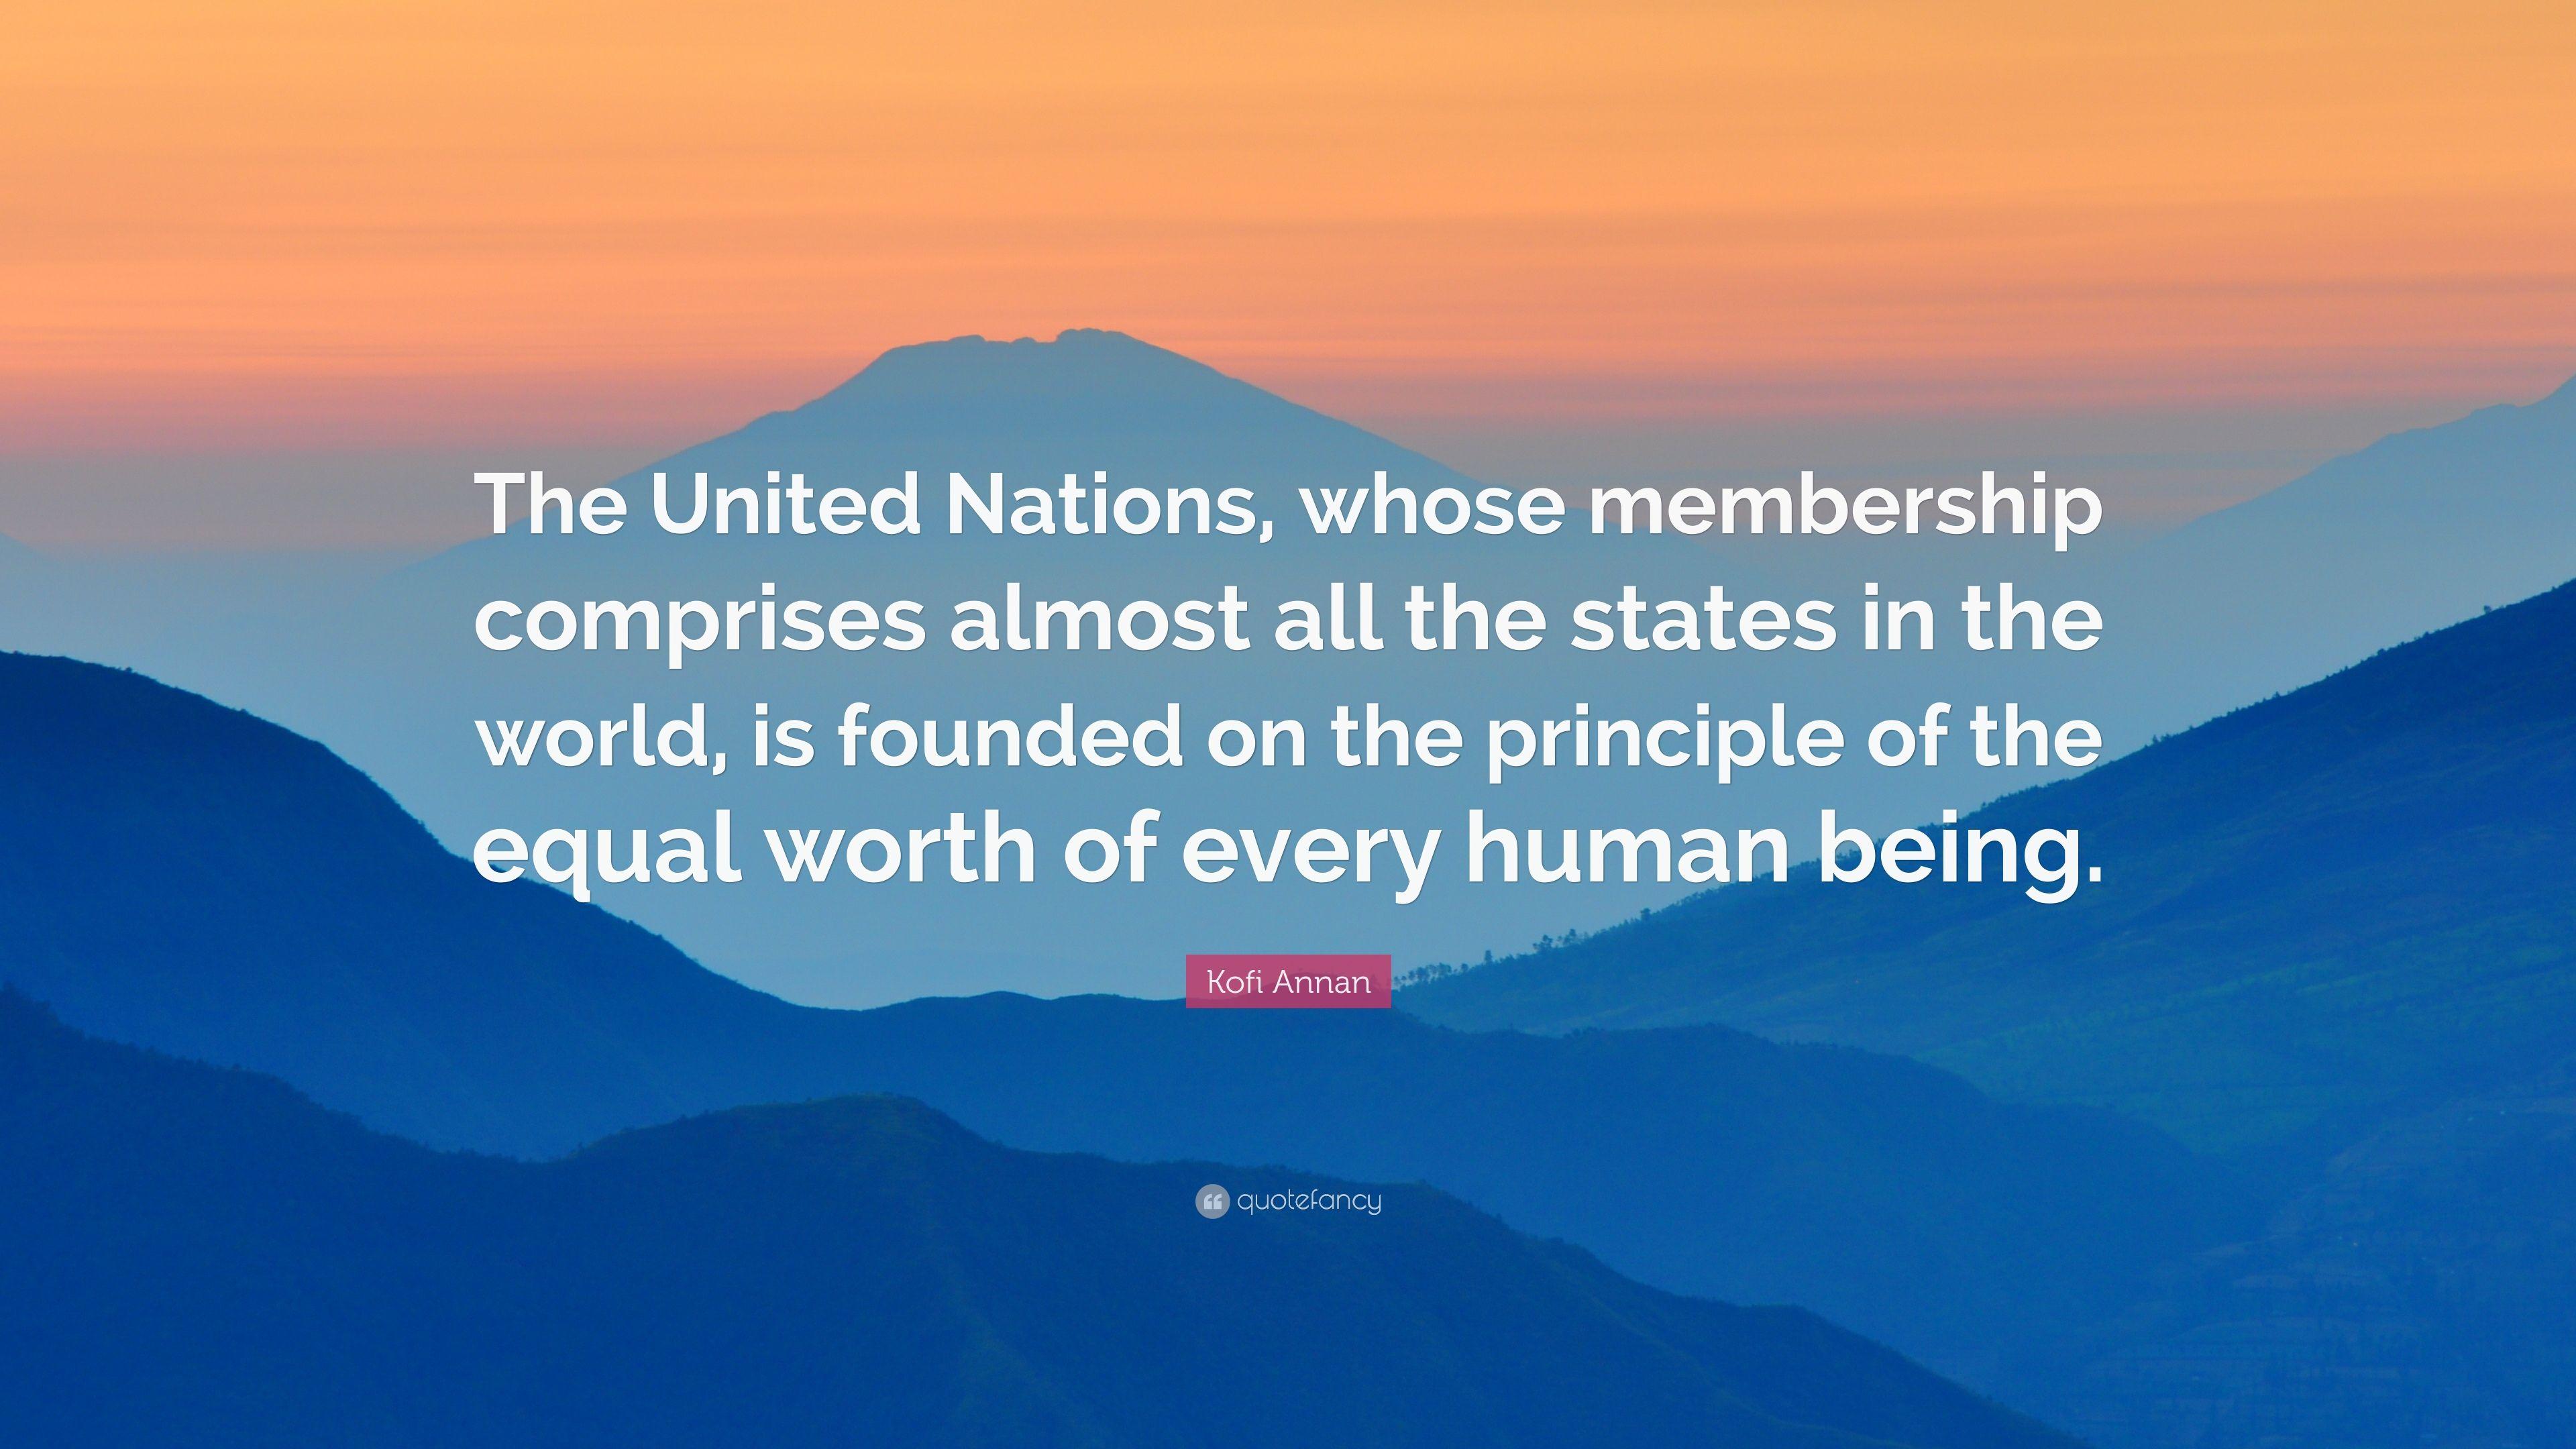 Kofi Annan Quote: “The United Nations, whose membership comprises